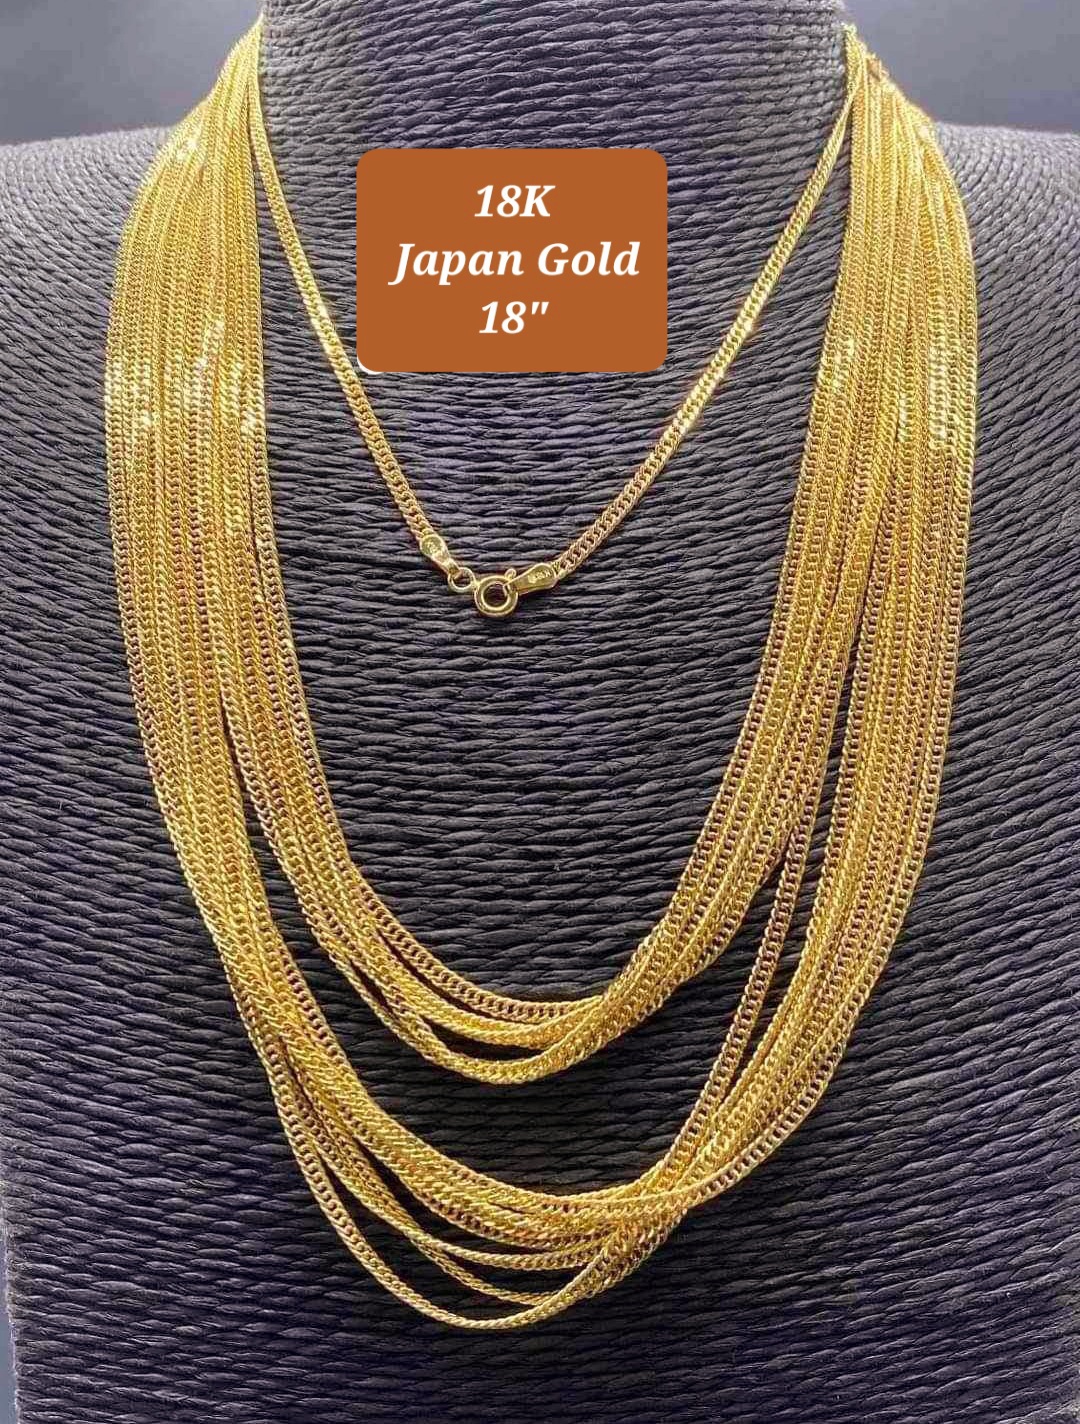 K18 Japan Gold 12 Cut Kihei Chain Necklace Mens Women's 24” long 3.5mm  14.9g | eBay